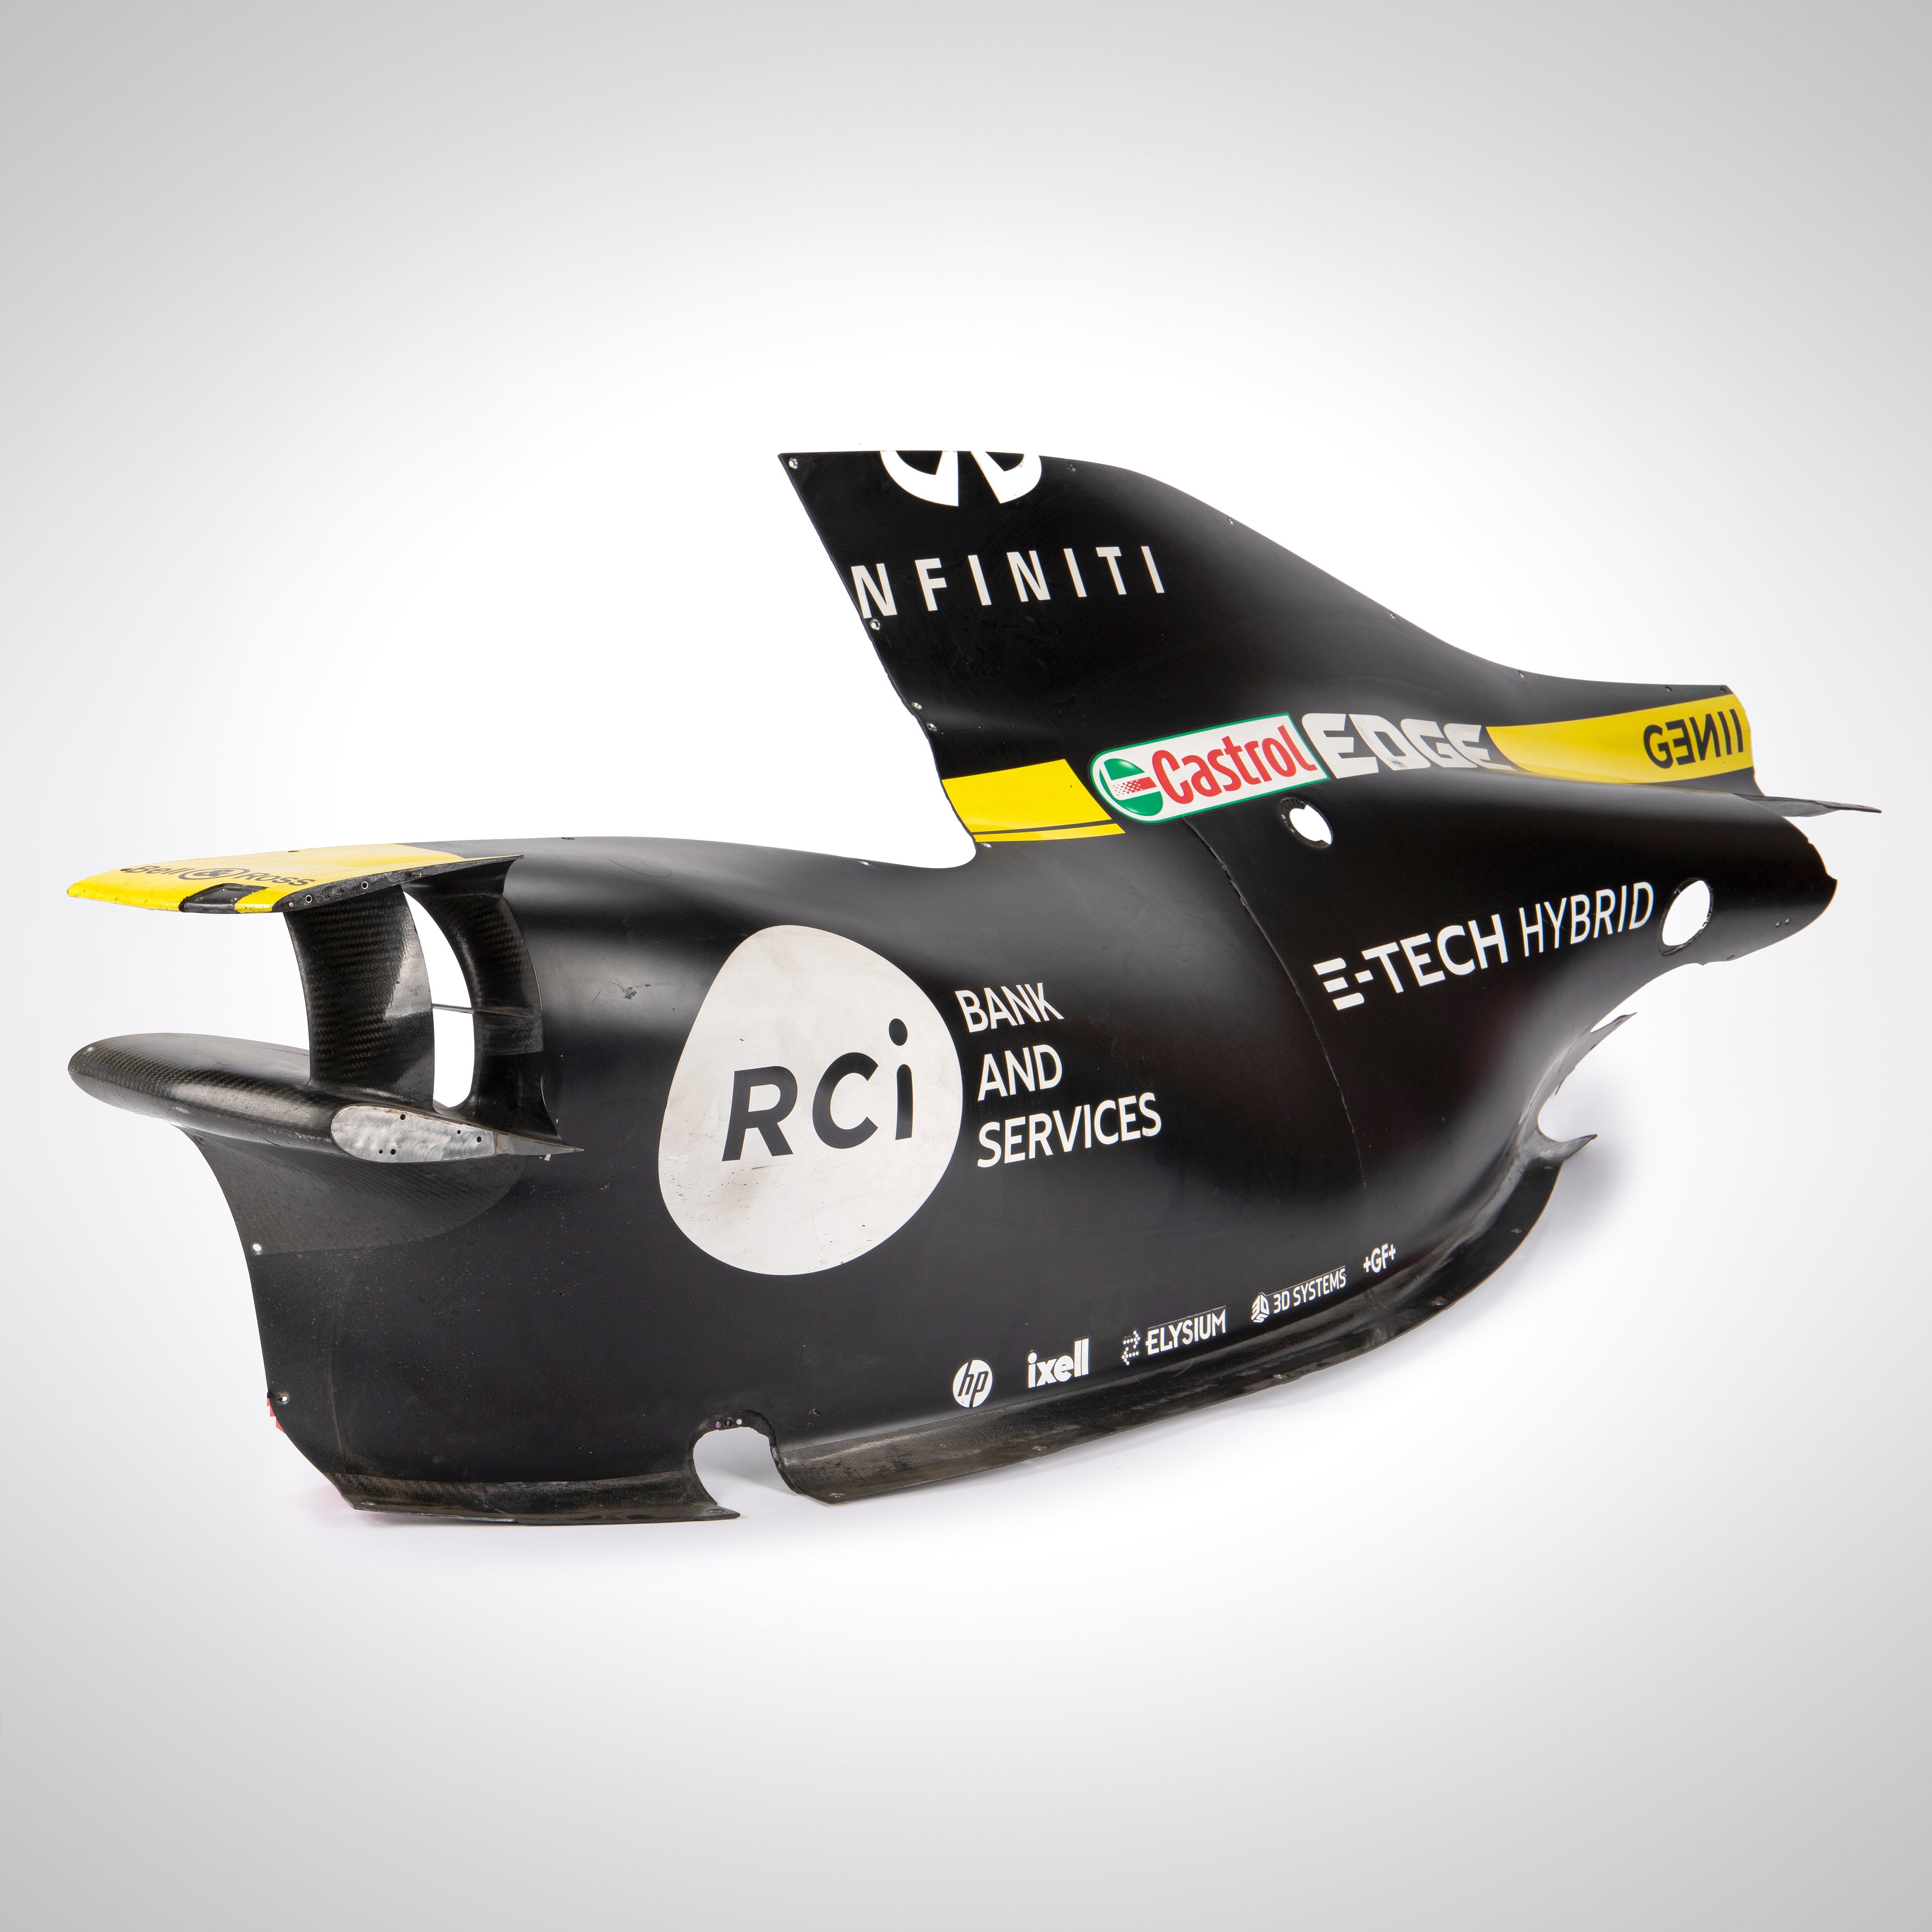 Renault F1 Team 2020 Left-Hand Sidepod with Infiniti Branding